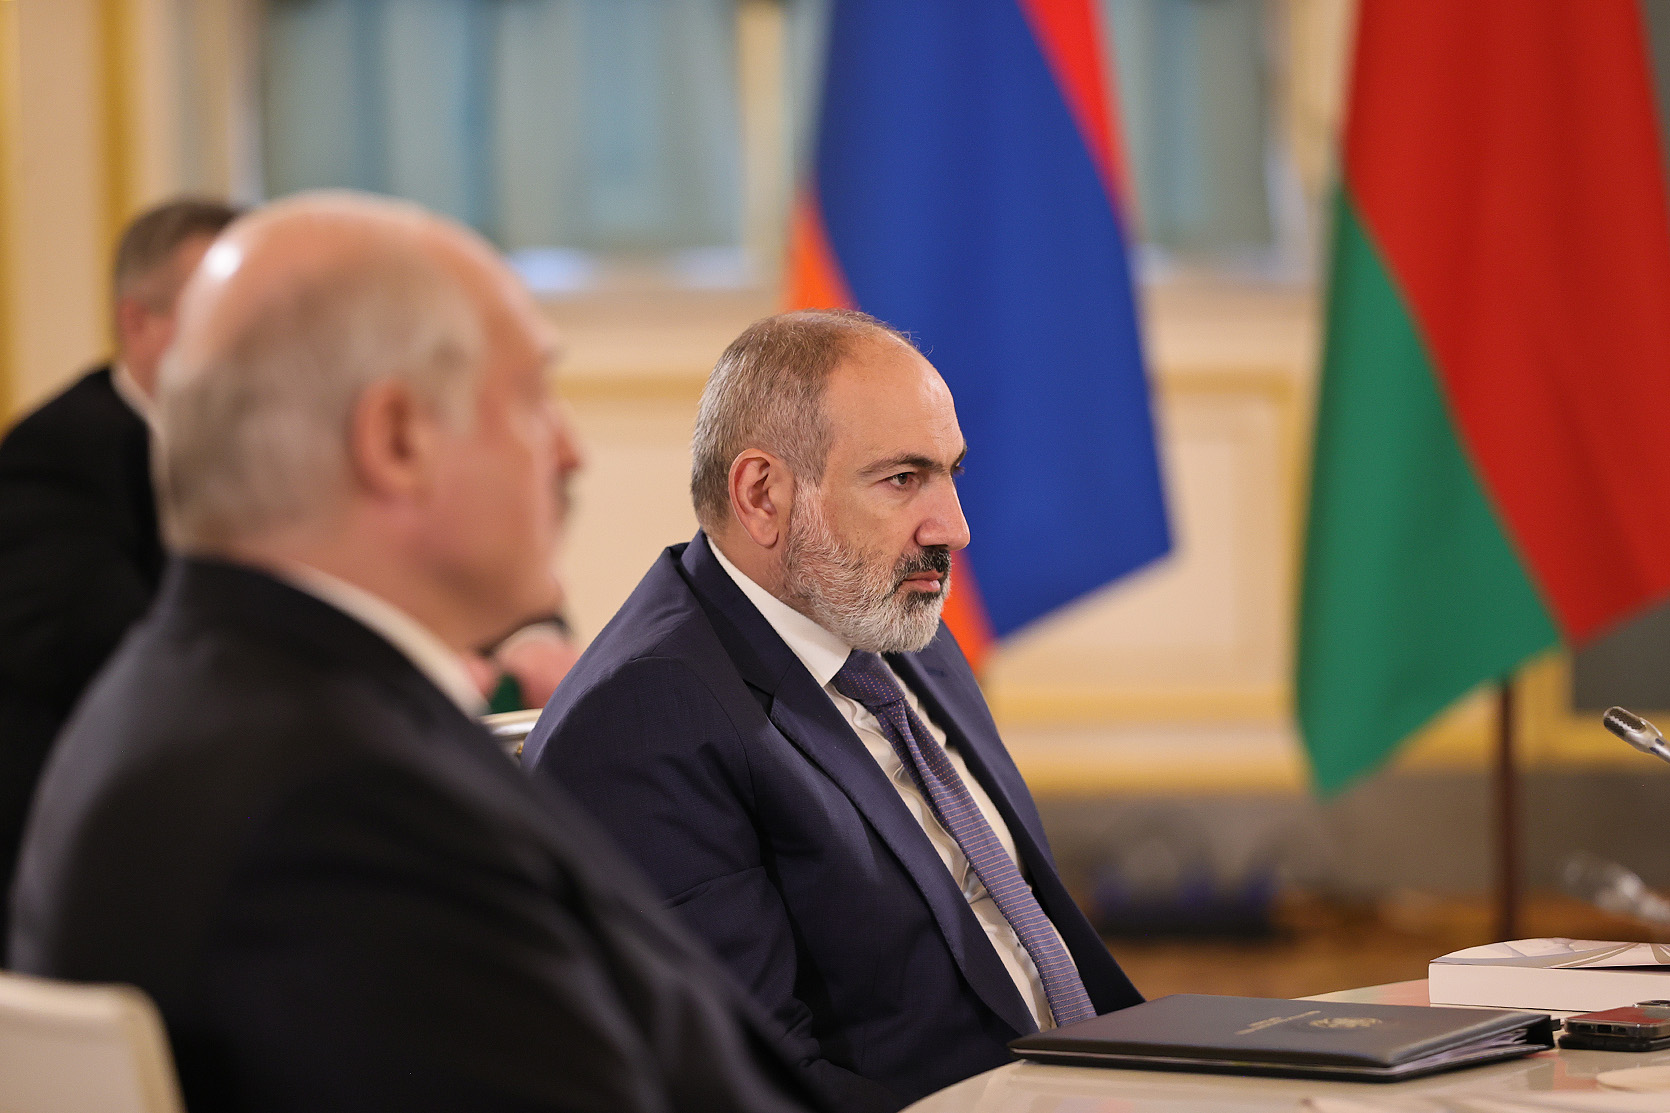  Никол Пашинян отреагировал на “коридорный” дискурс президента Азербайджана